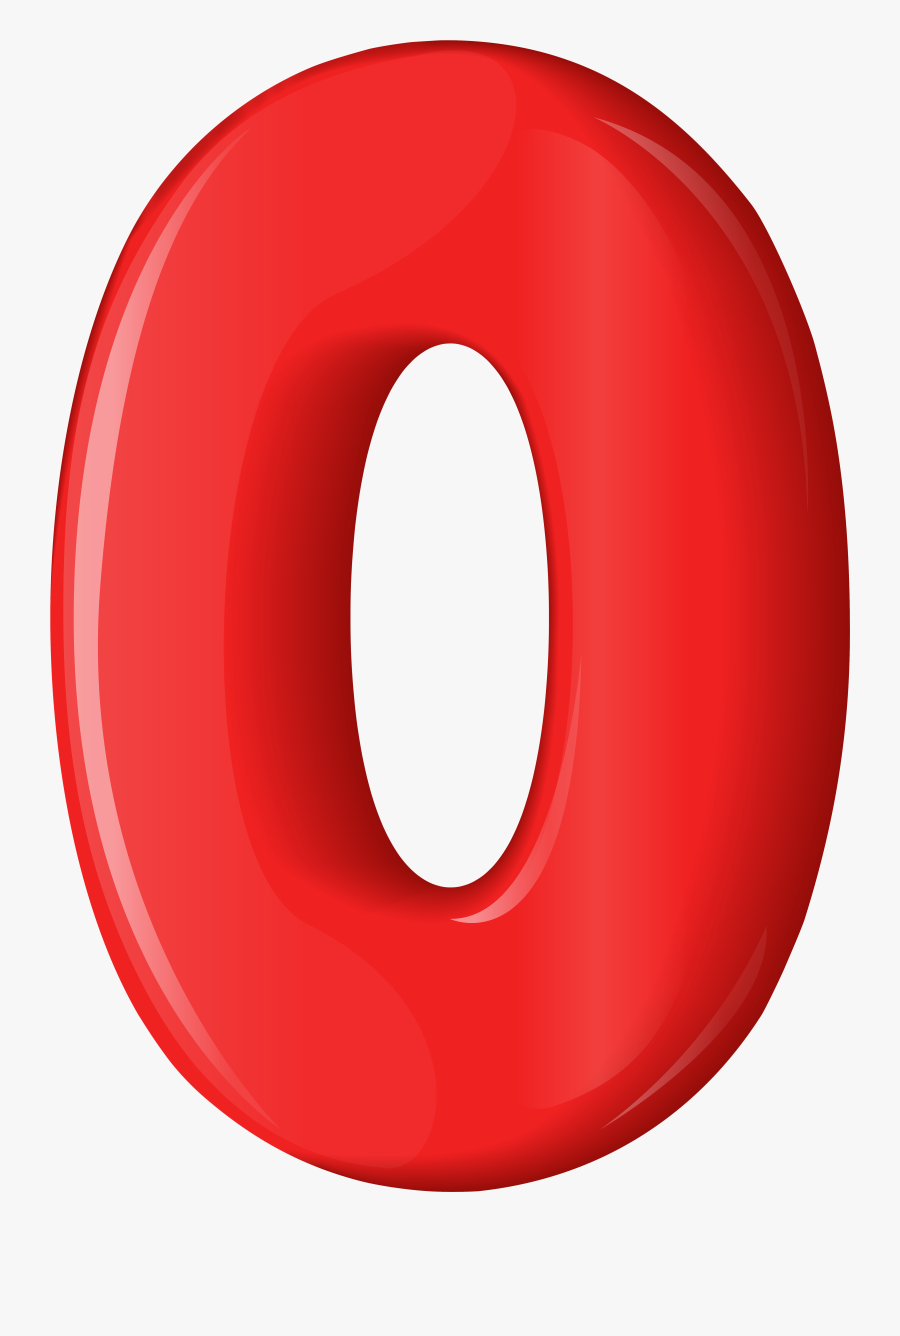 Red Number Zero Transparent Png Clip Art - Zero Clipart, Transparent Clipart